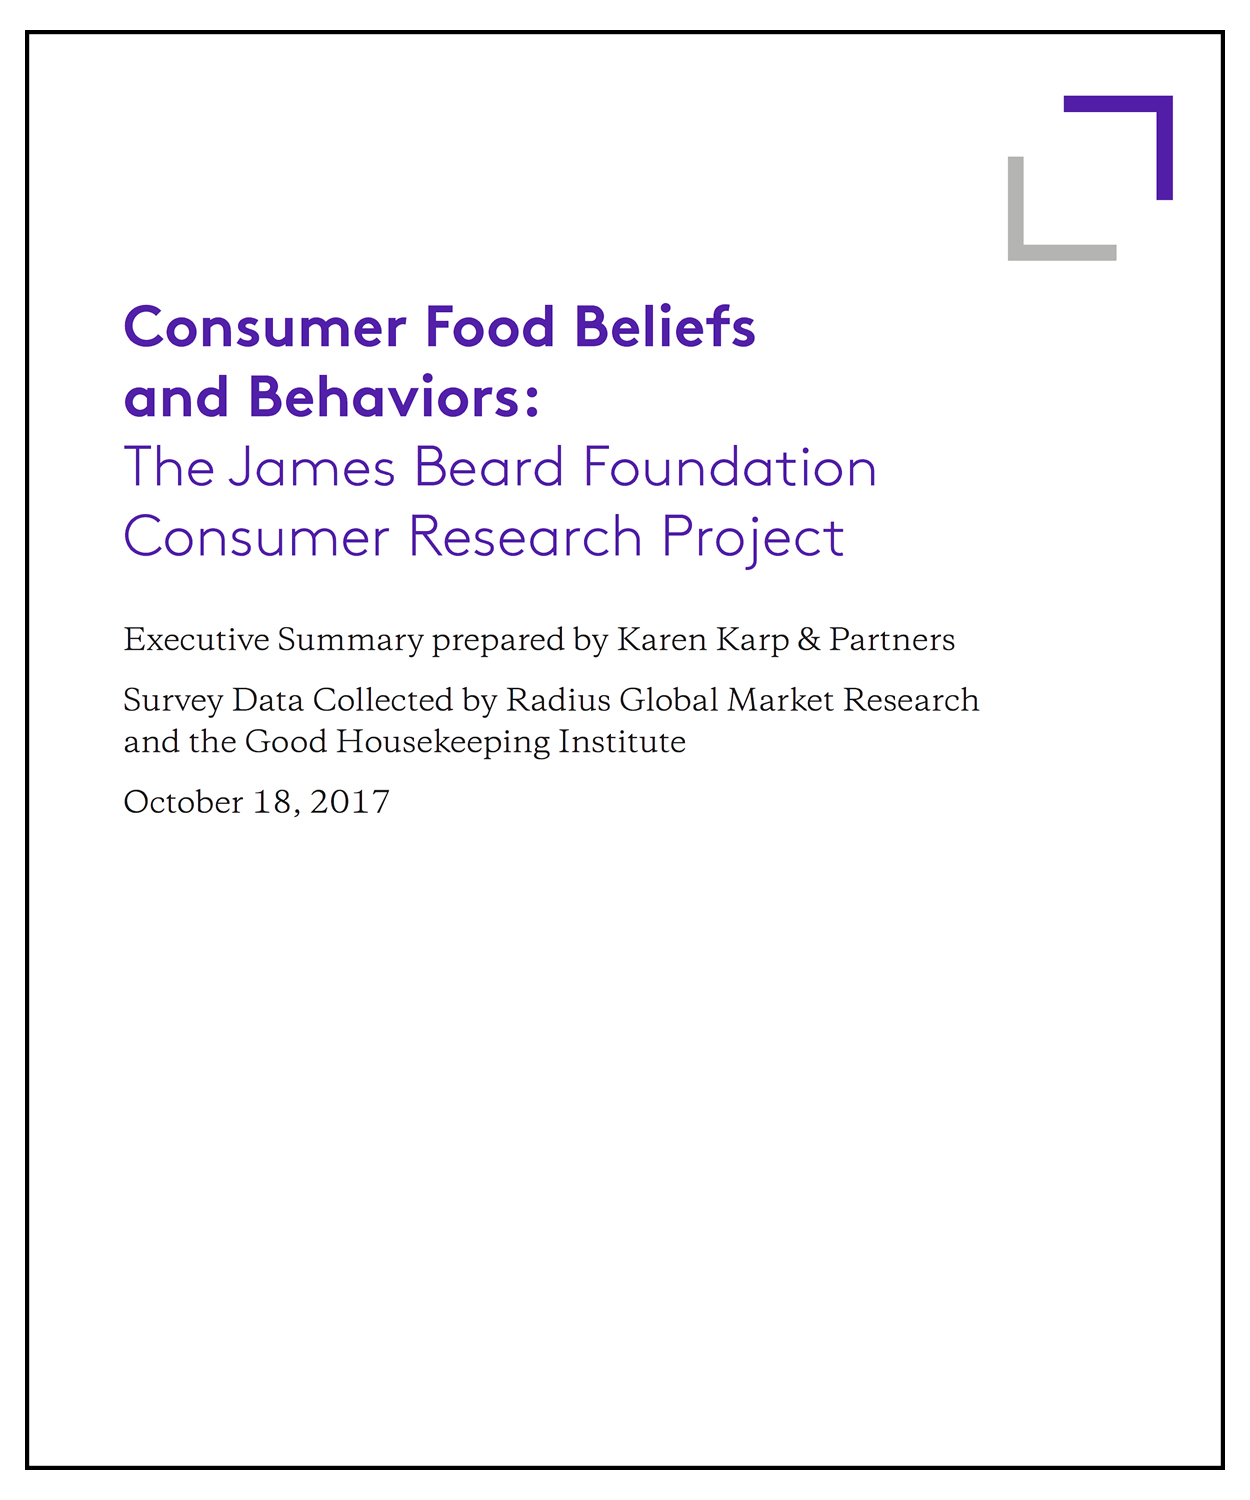 Consumer Food Beliefs and Behaviors Survey